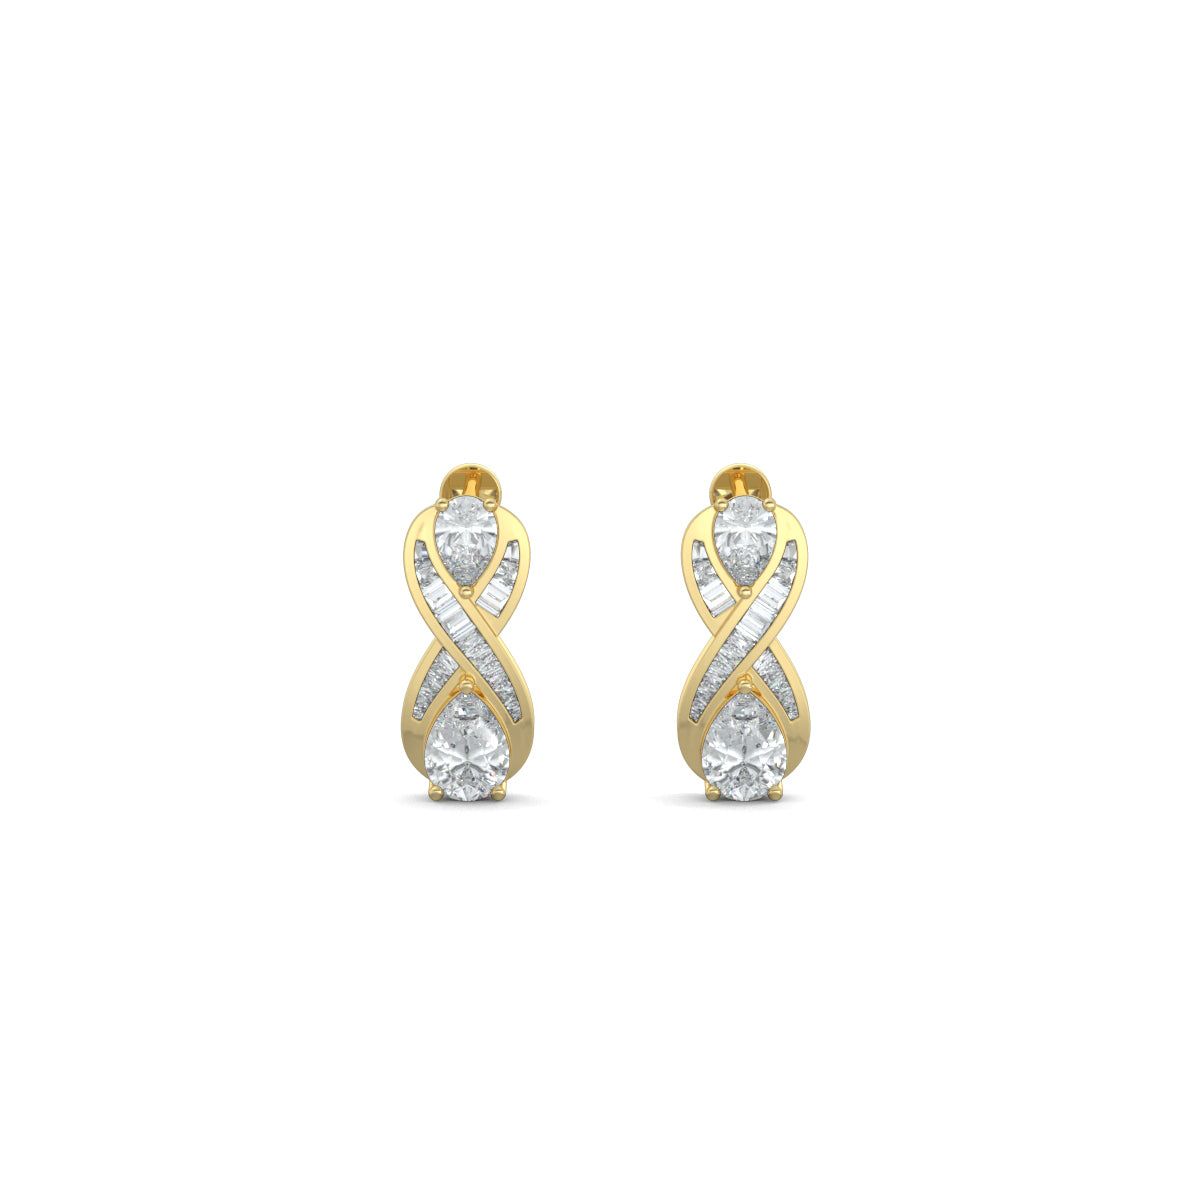 Yellow Gold, Diamond Earrings, Natural diamond earrings, Lab-grown diamond earrings, Eight-shaped earrings, Baguette channeling, Pear diamonds, Infinite Glimmer Earrings, Sophisticated jewelry, Timeless elegance.